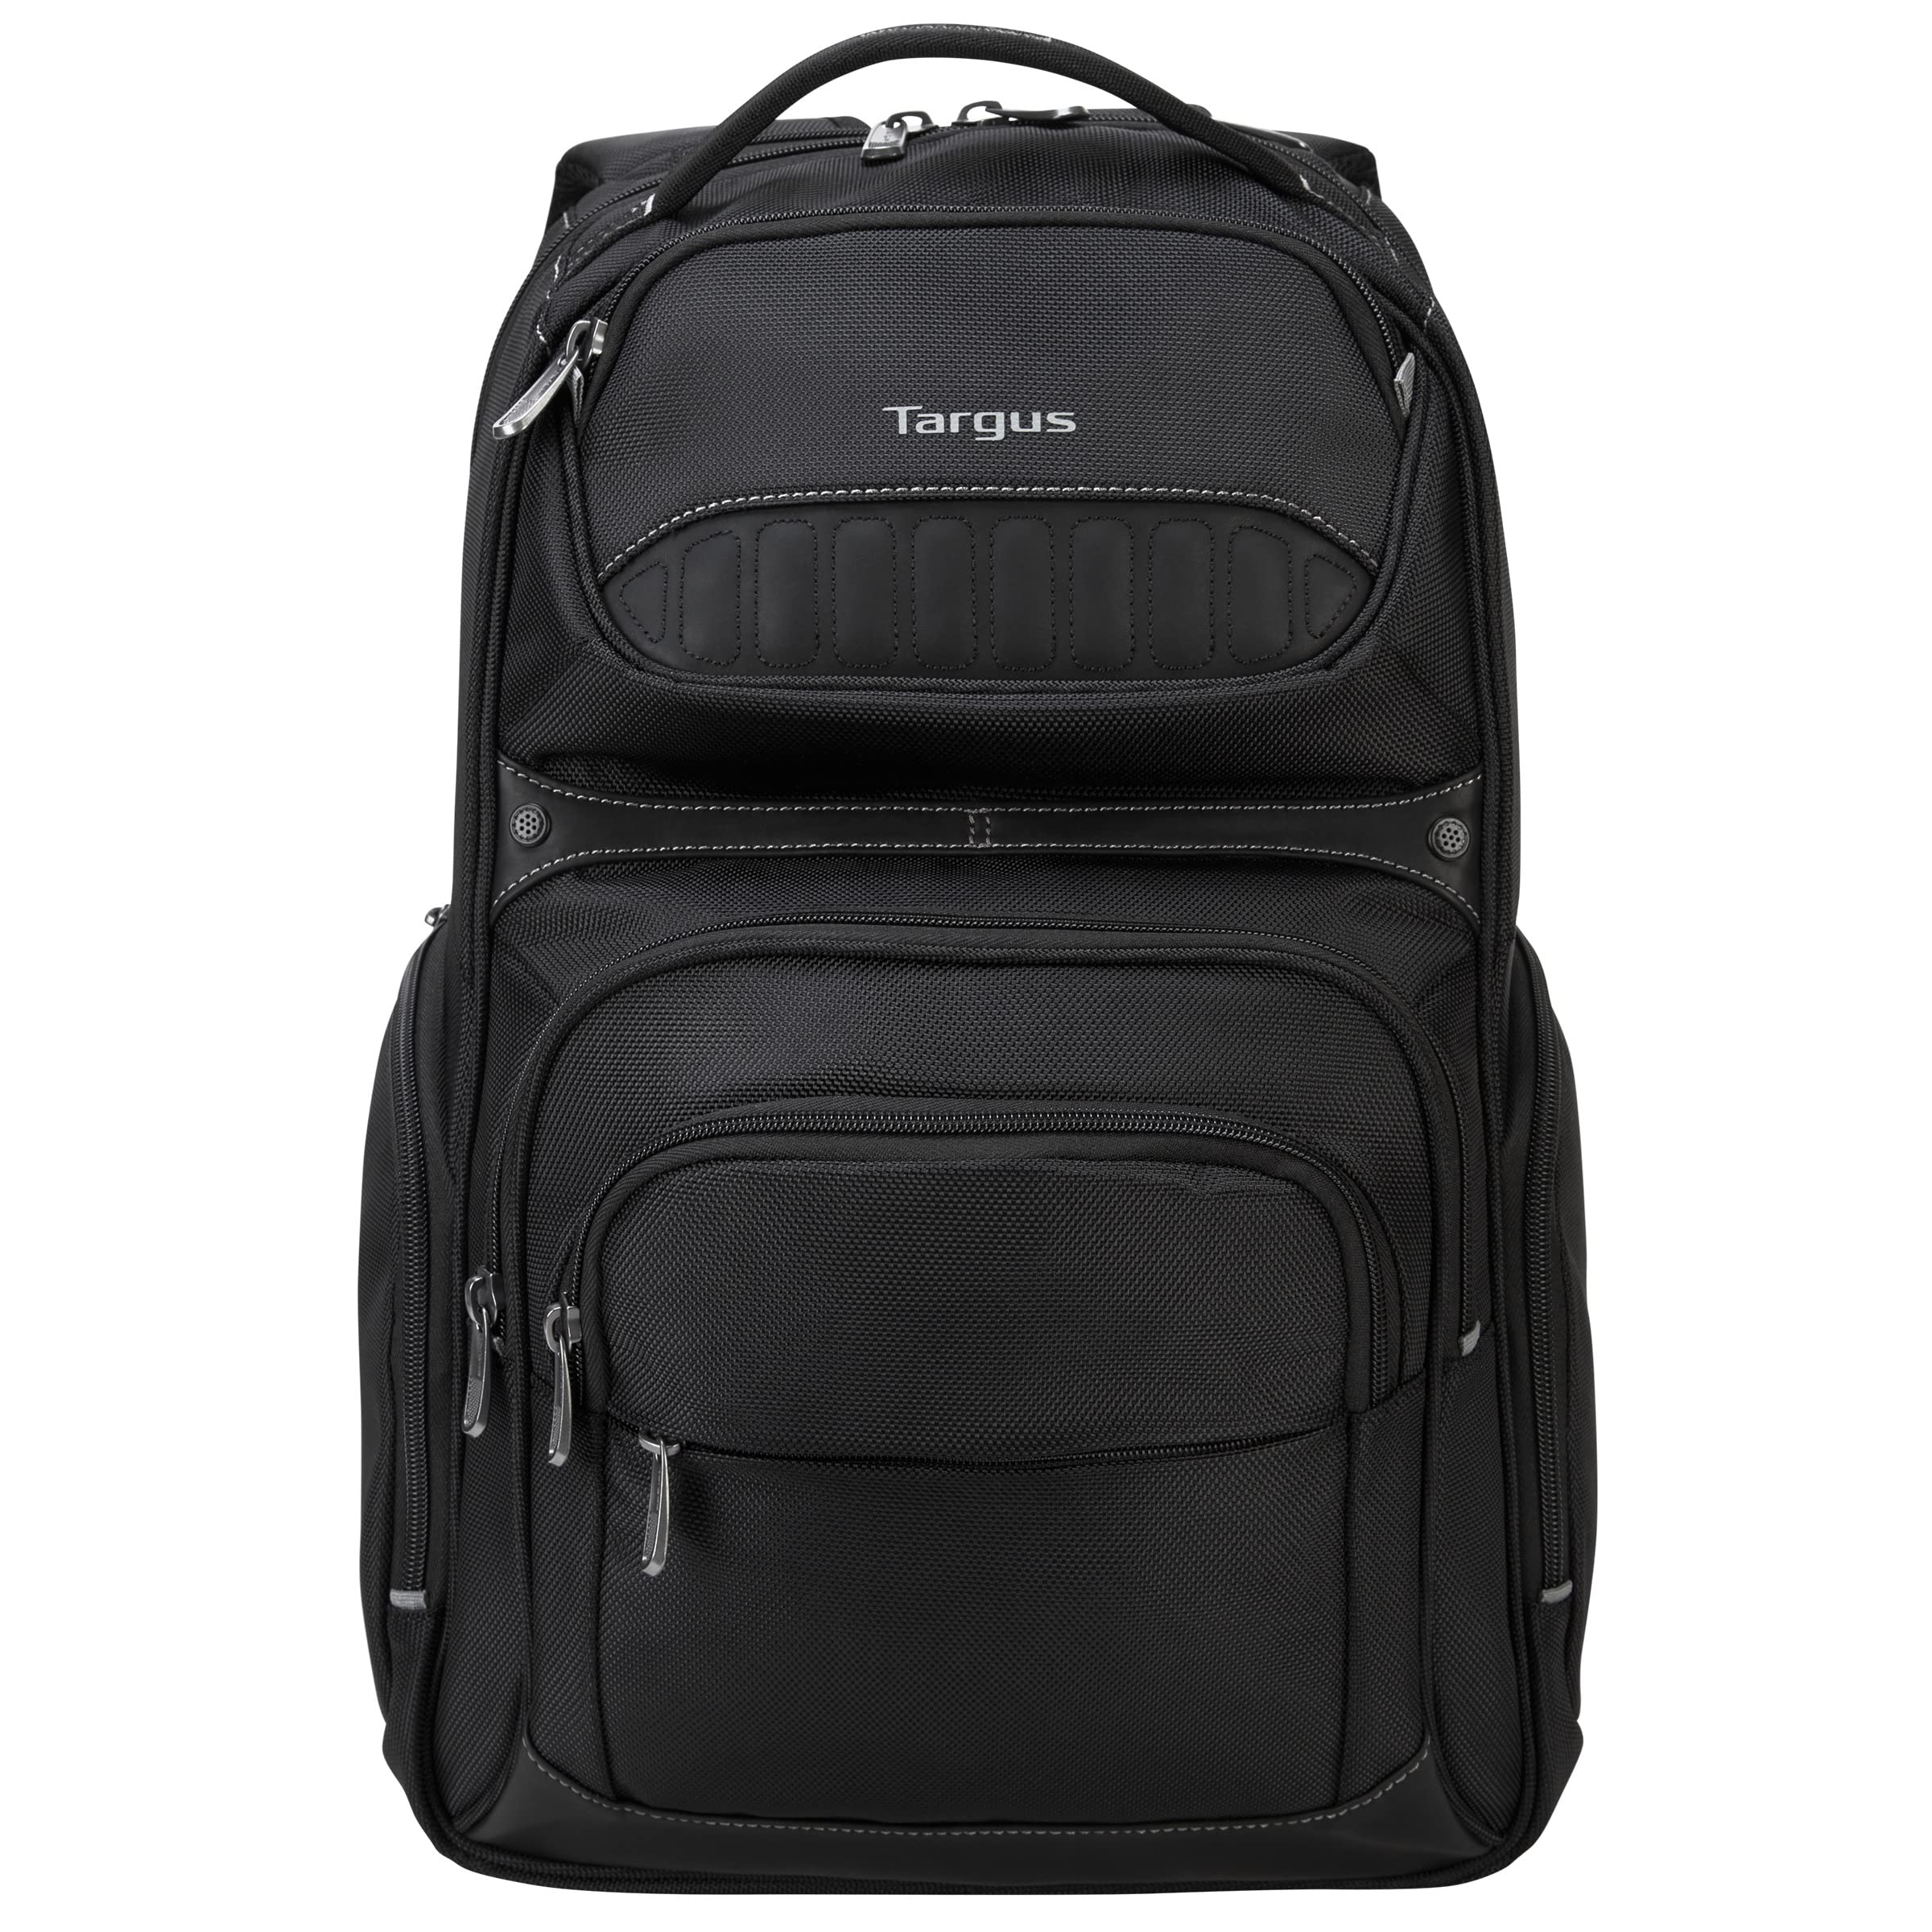 Targus Legend IQ Laptop Backpack Bag for Business Fits 16-Inch Laptop Professional Travel Backpack for Men and Women Carry on Backpack Bookbag Backpack Travel Backpack for Women Black(TSB705US)